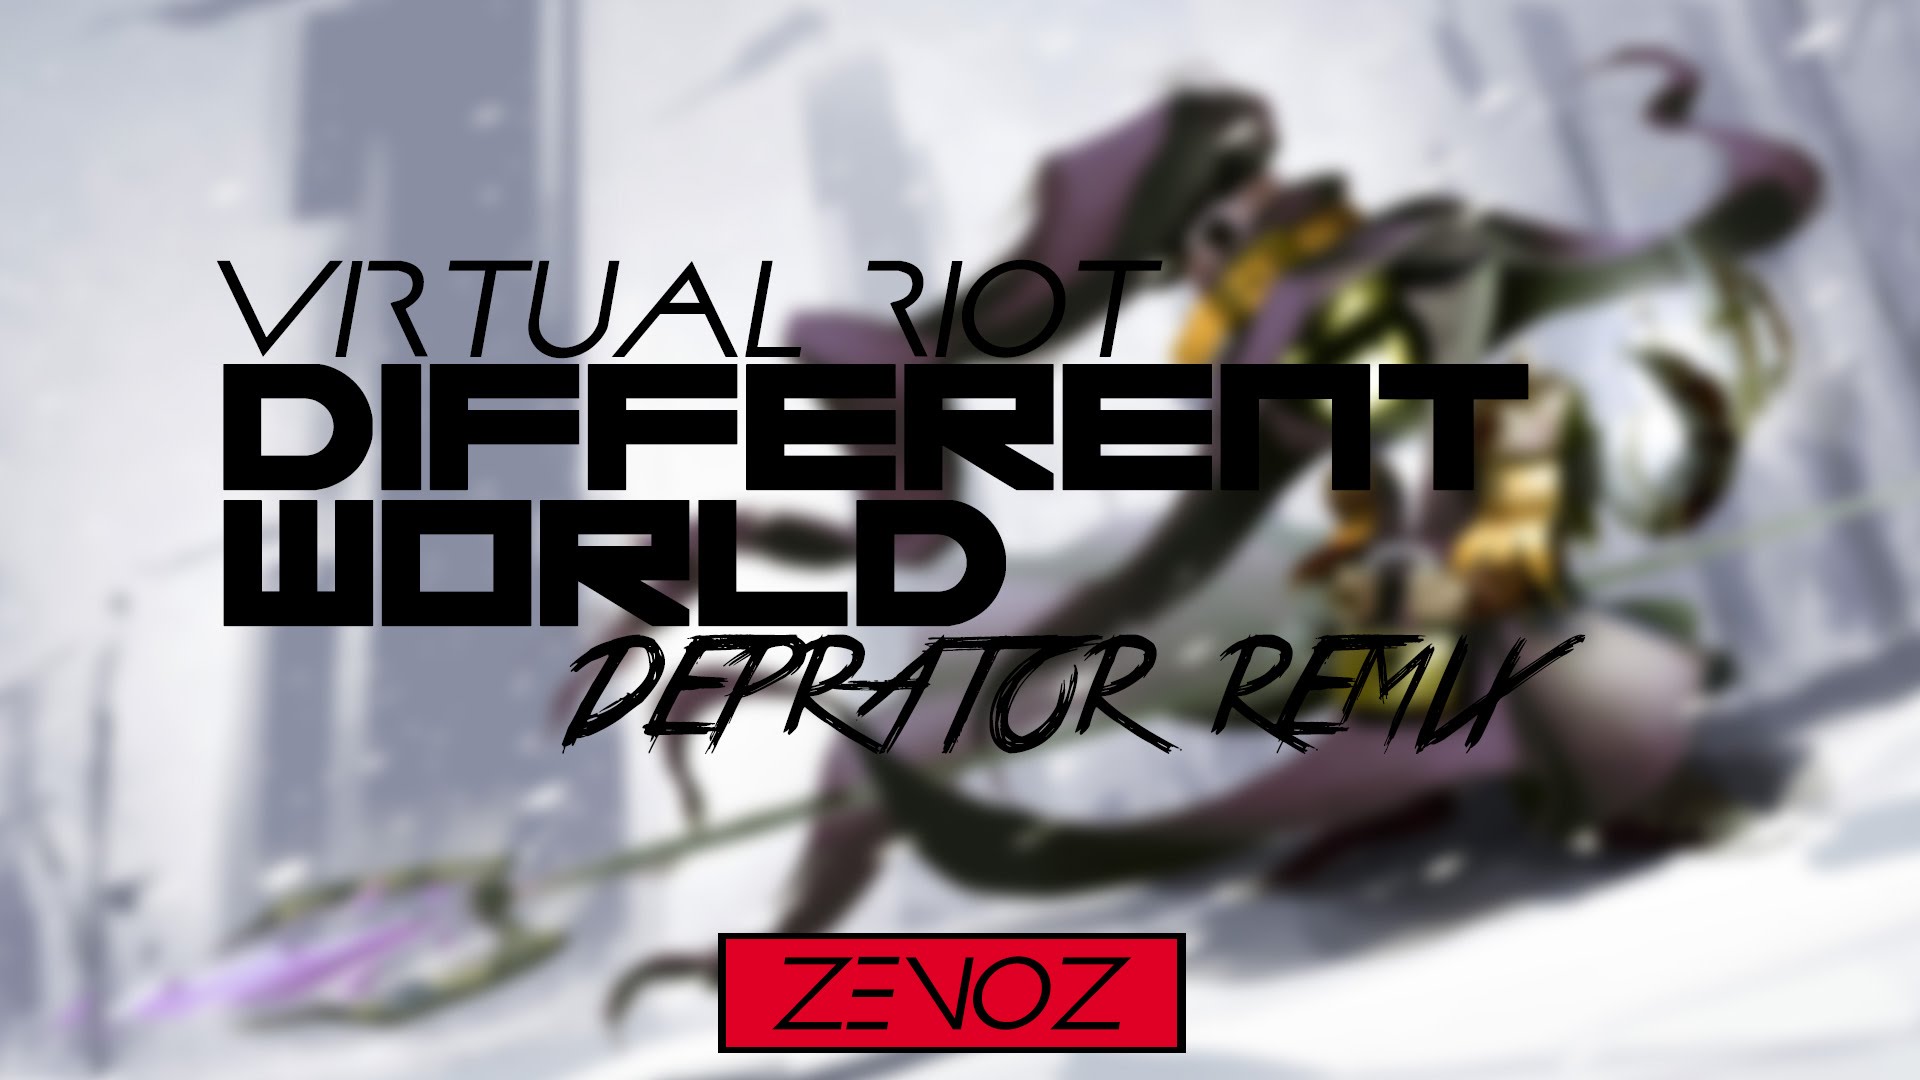 Virtual Riot Different World Deprator Remix